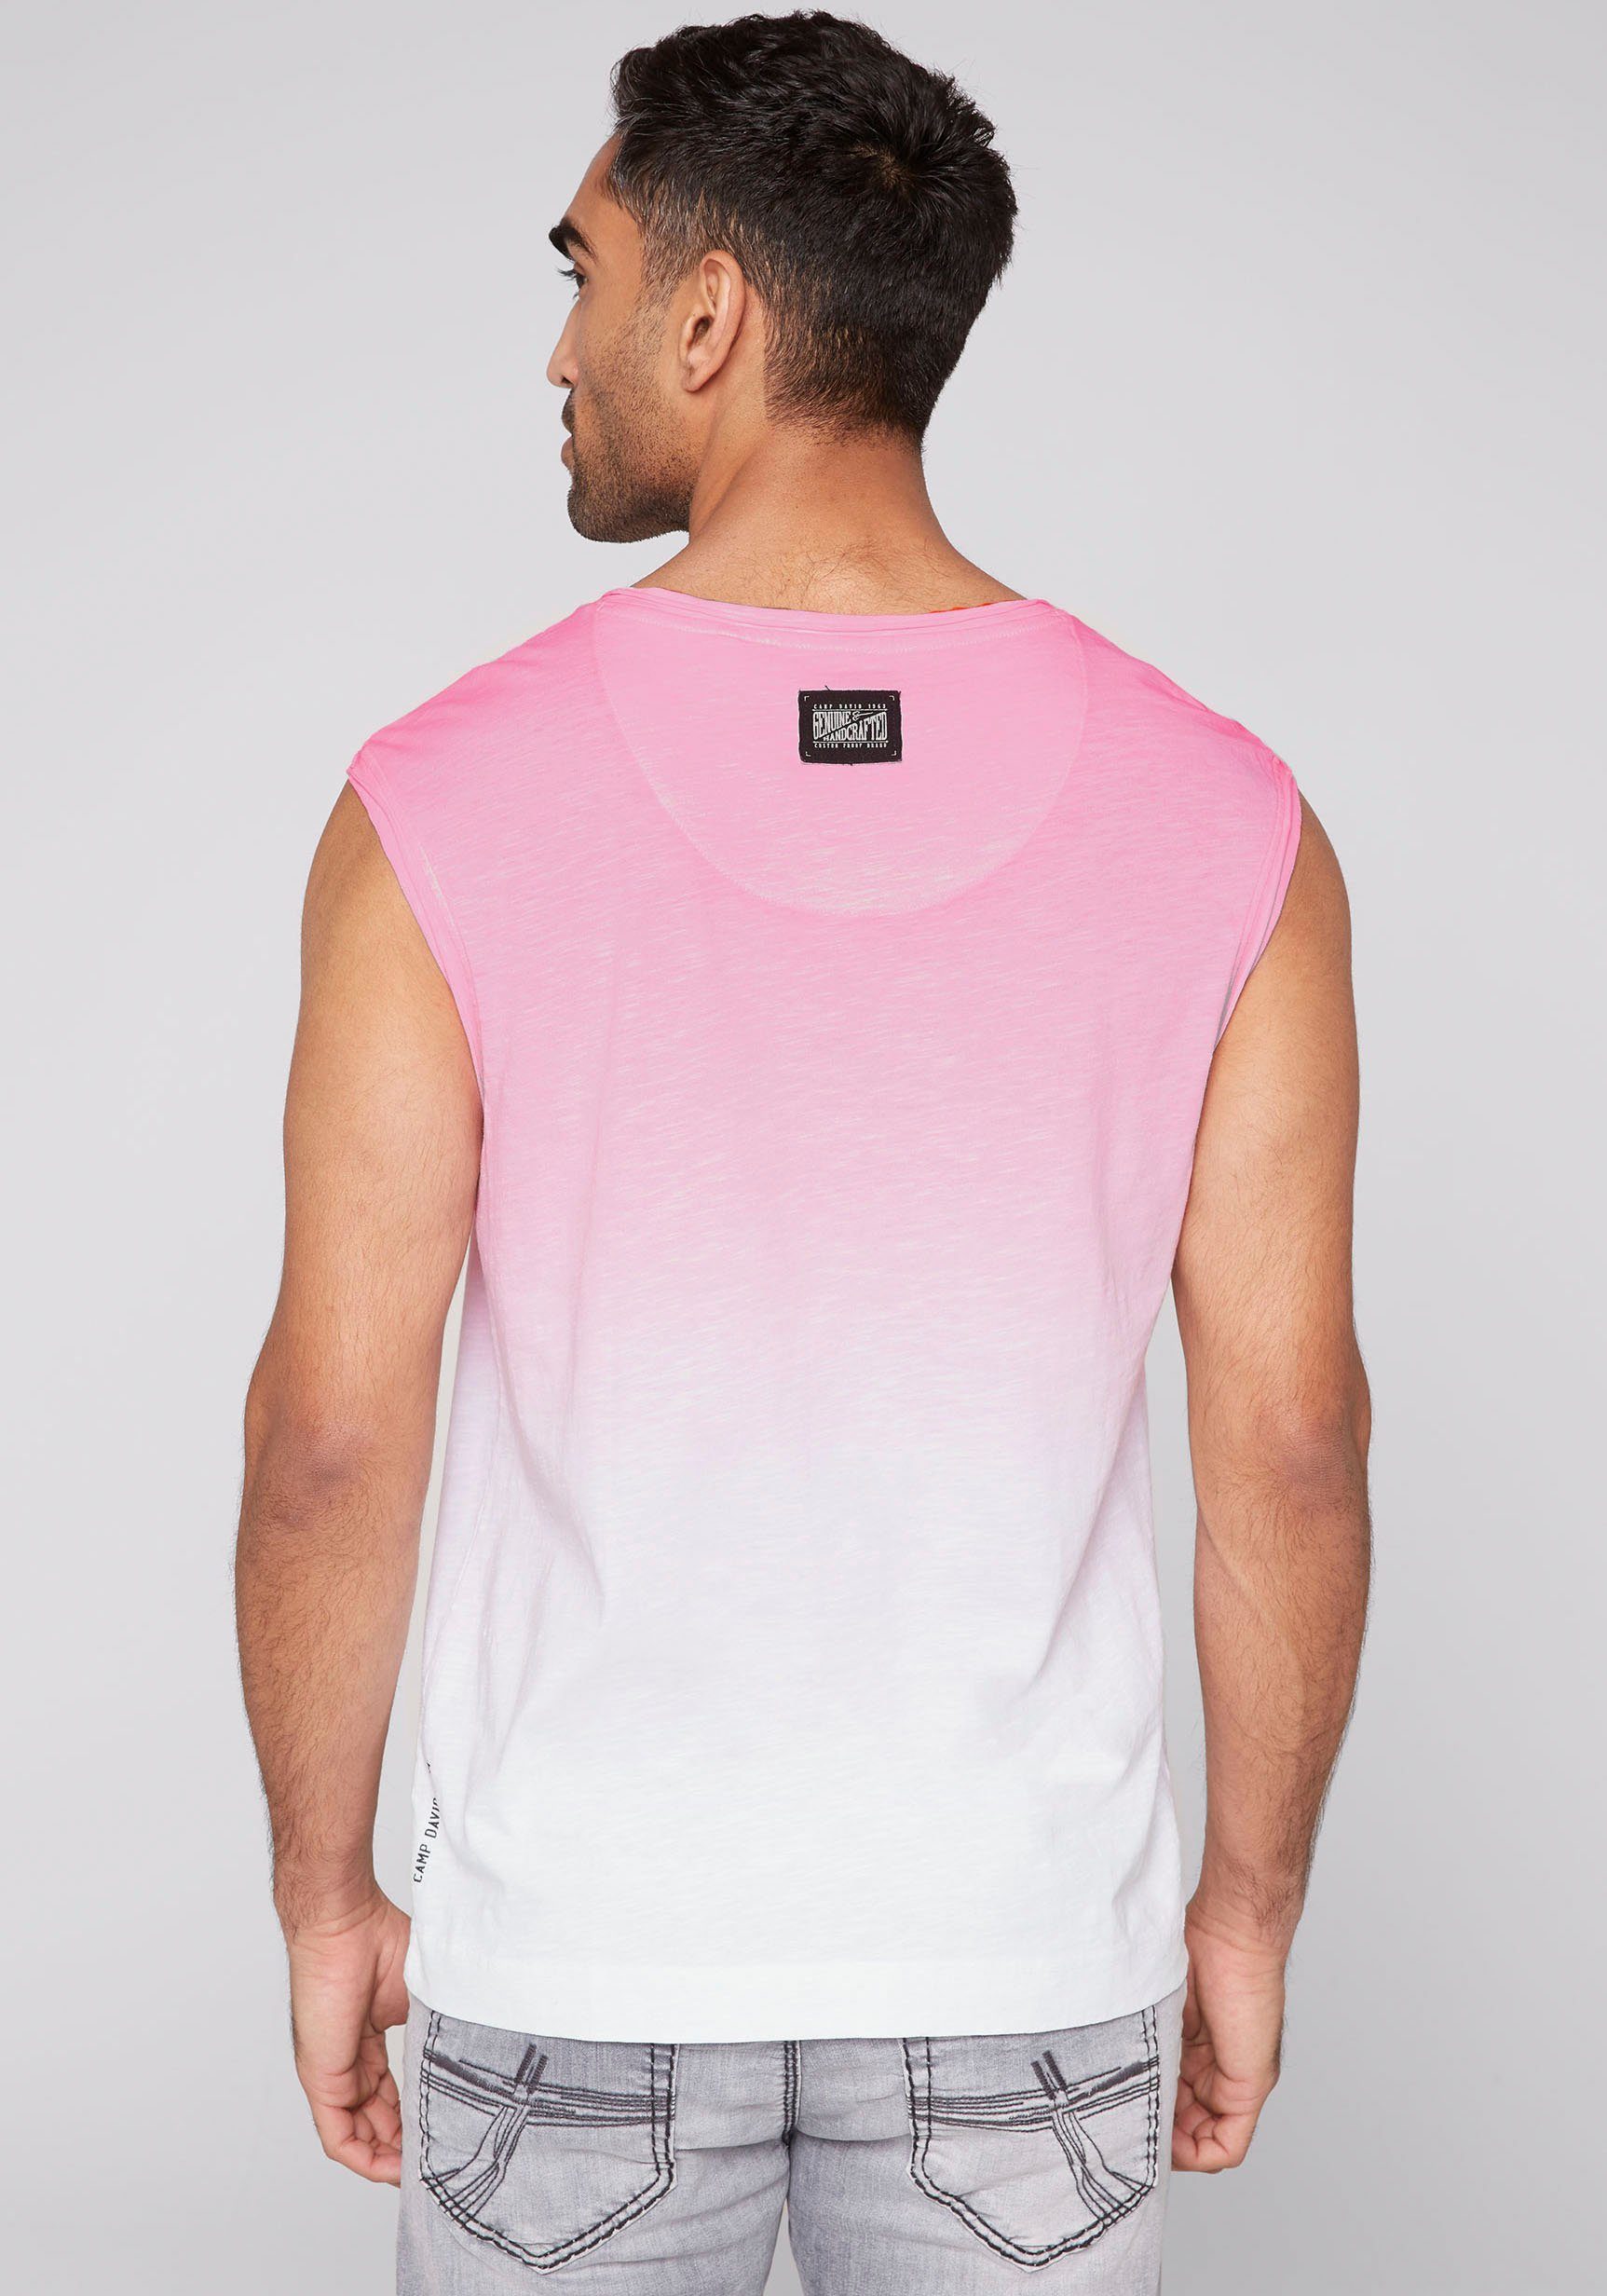 CAMP DAVID V-Shirt neon pink opticwhite 